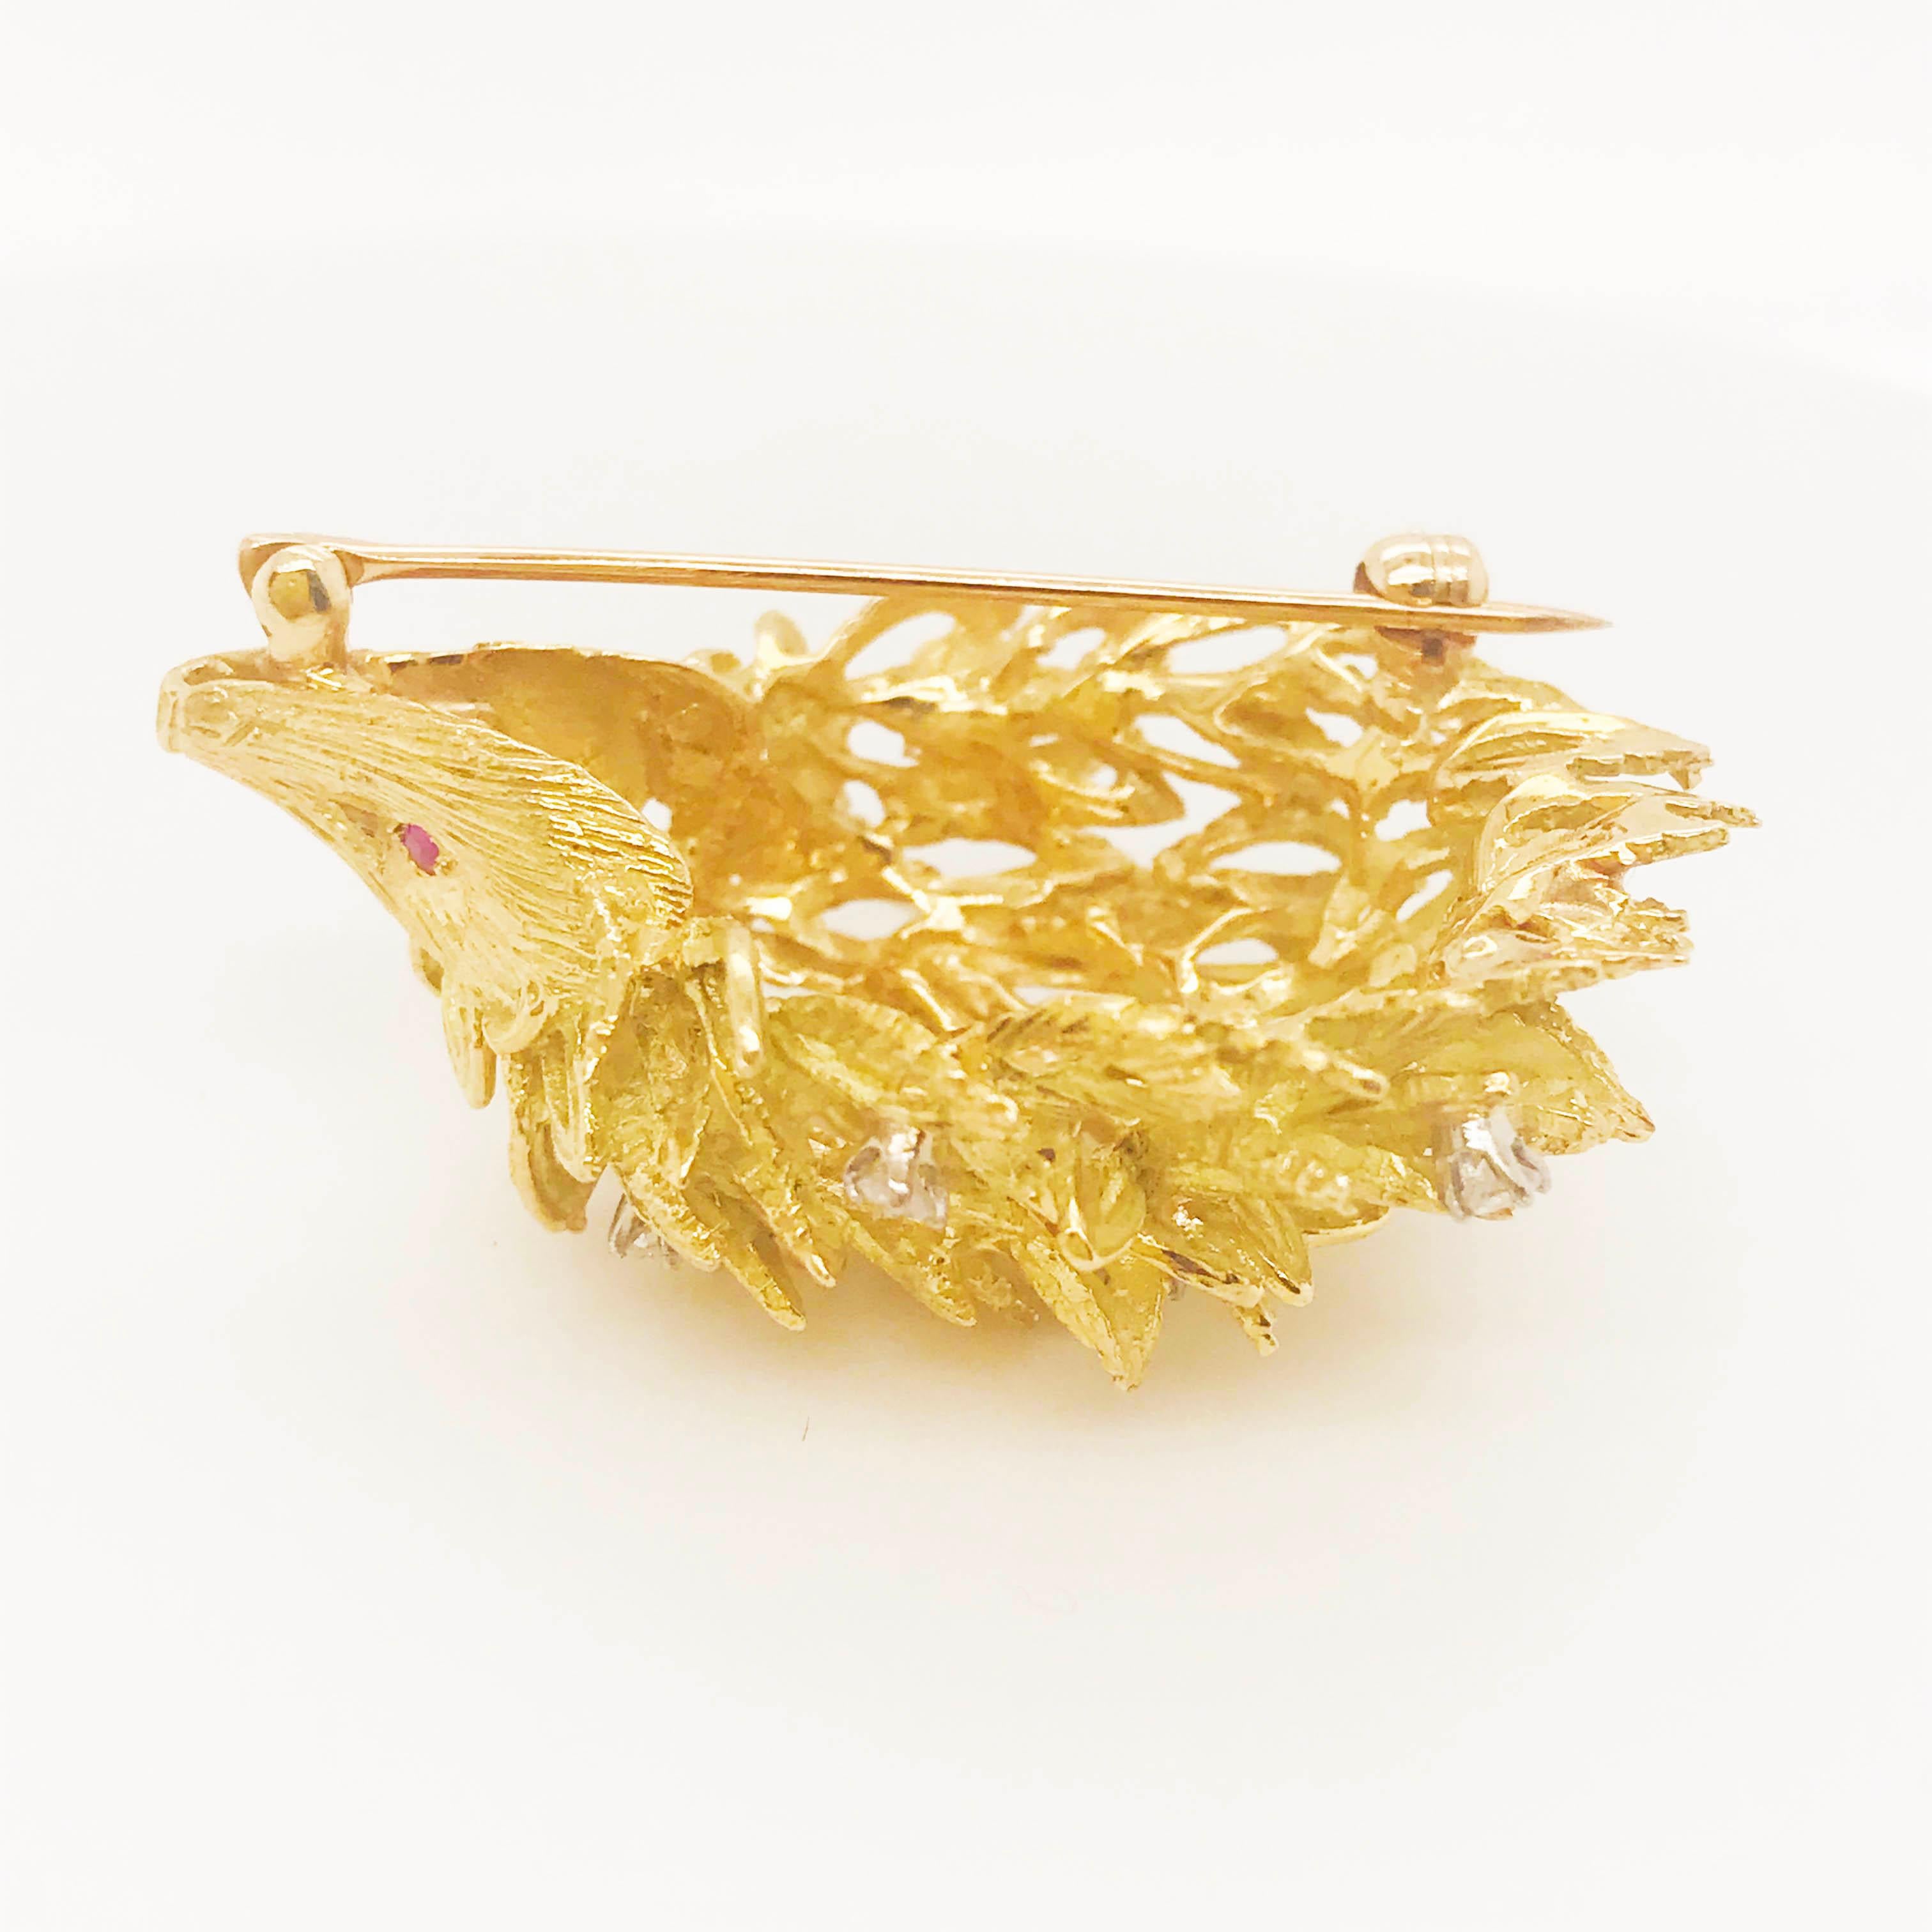 Gemstone Porcupine Brooch, 0.25 Diamond and Ruby, Pin, 14 Karat Gold XL Size 3